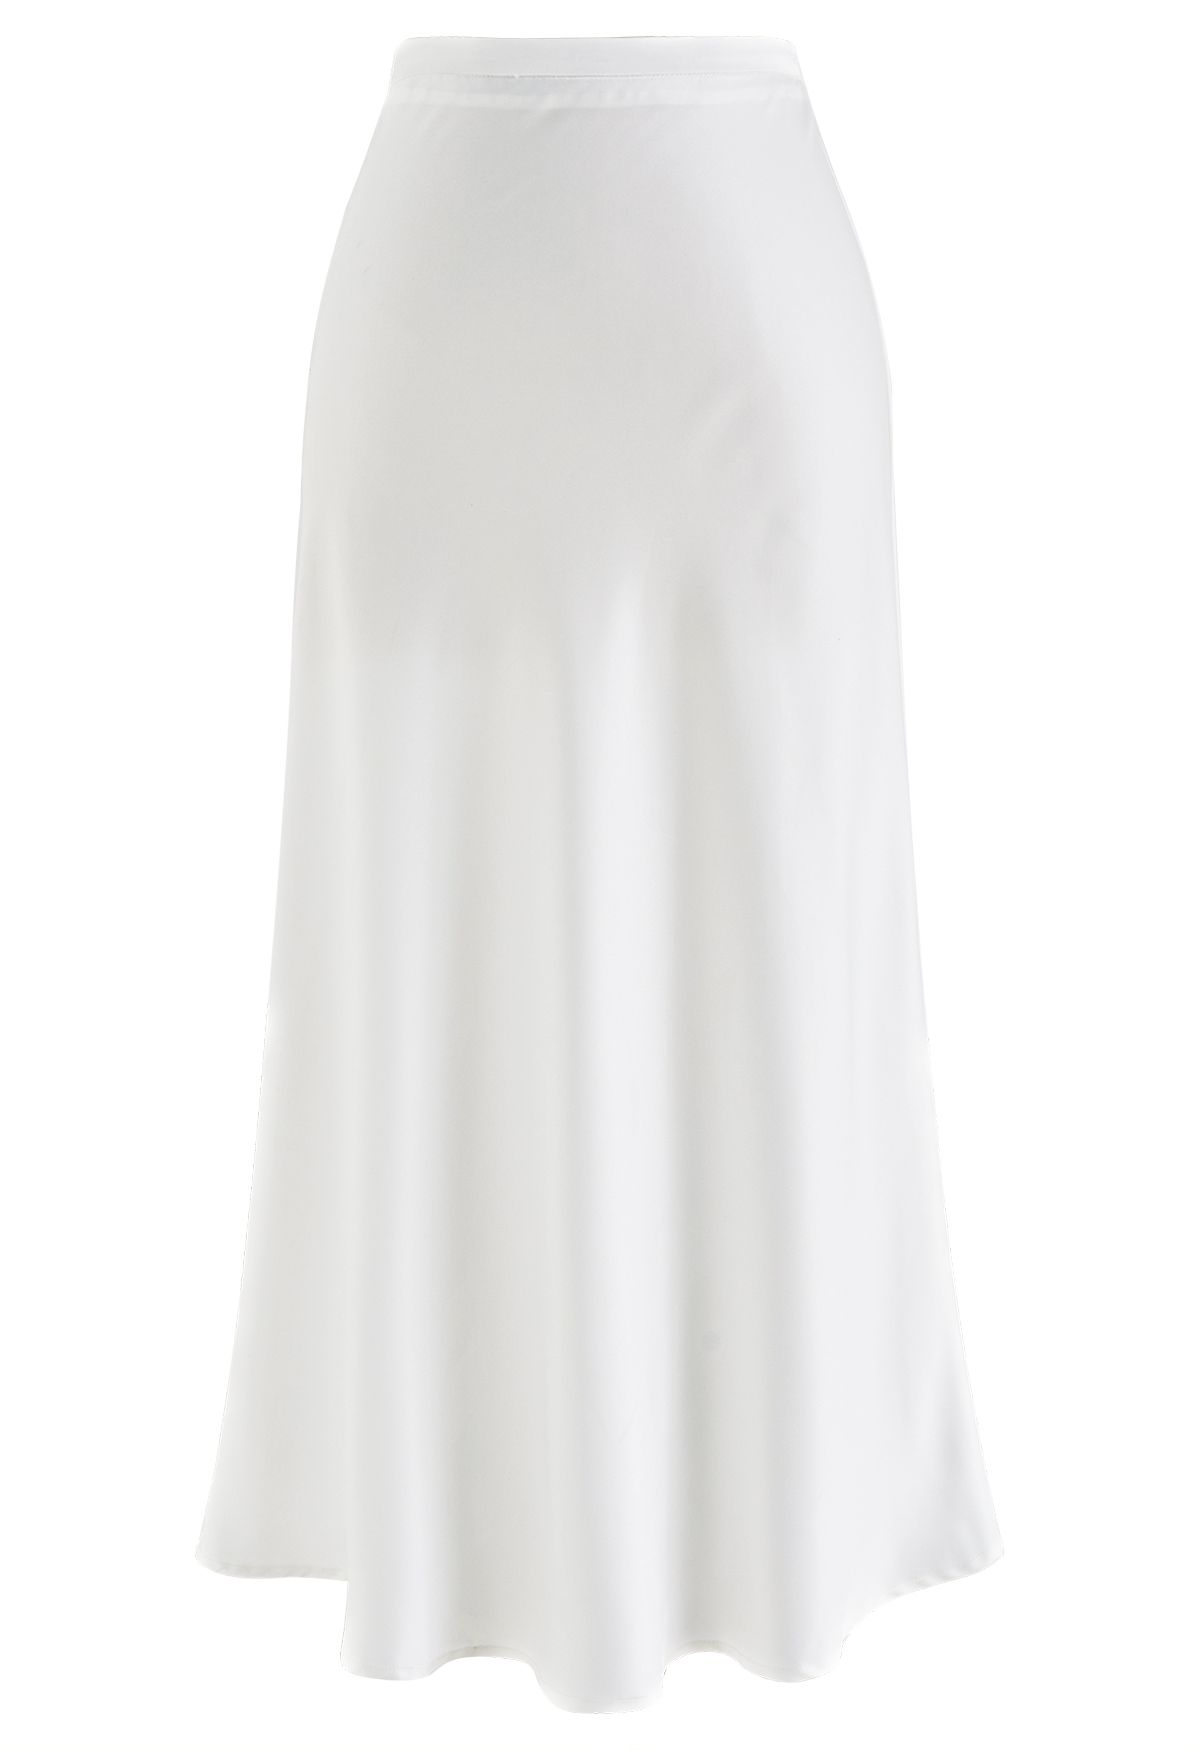 Satin Finish Bias Cut Midi Skirt in White